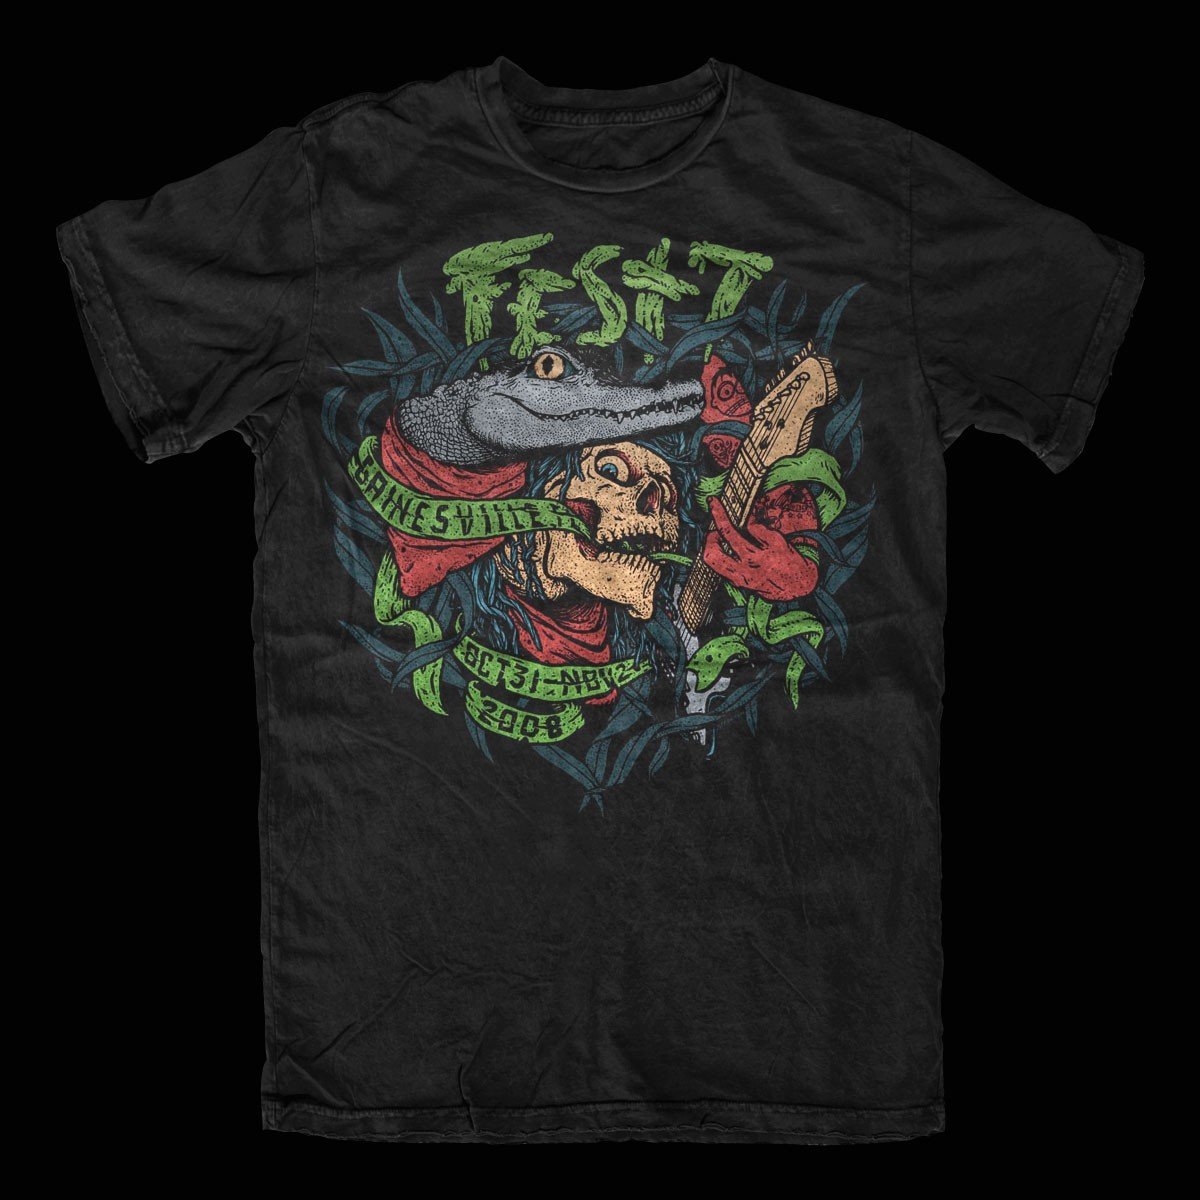 Fest 7 – Shirt Design